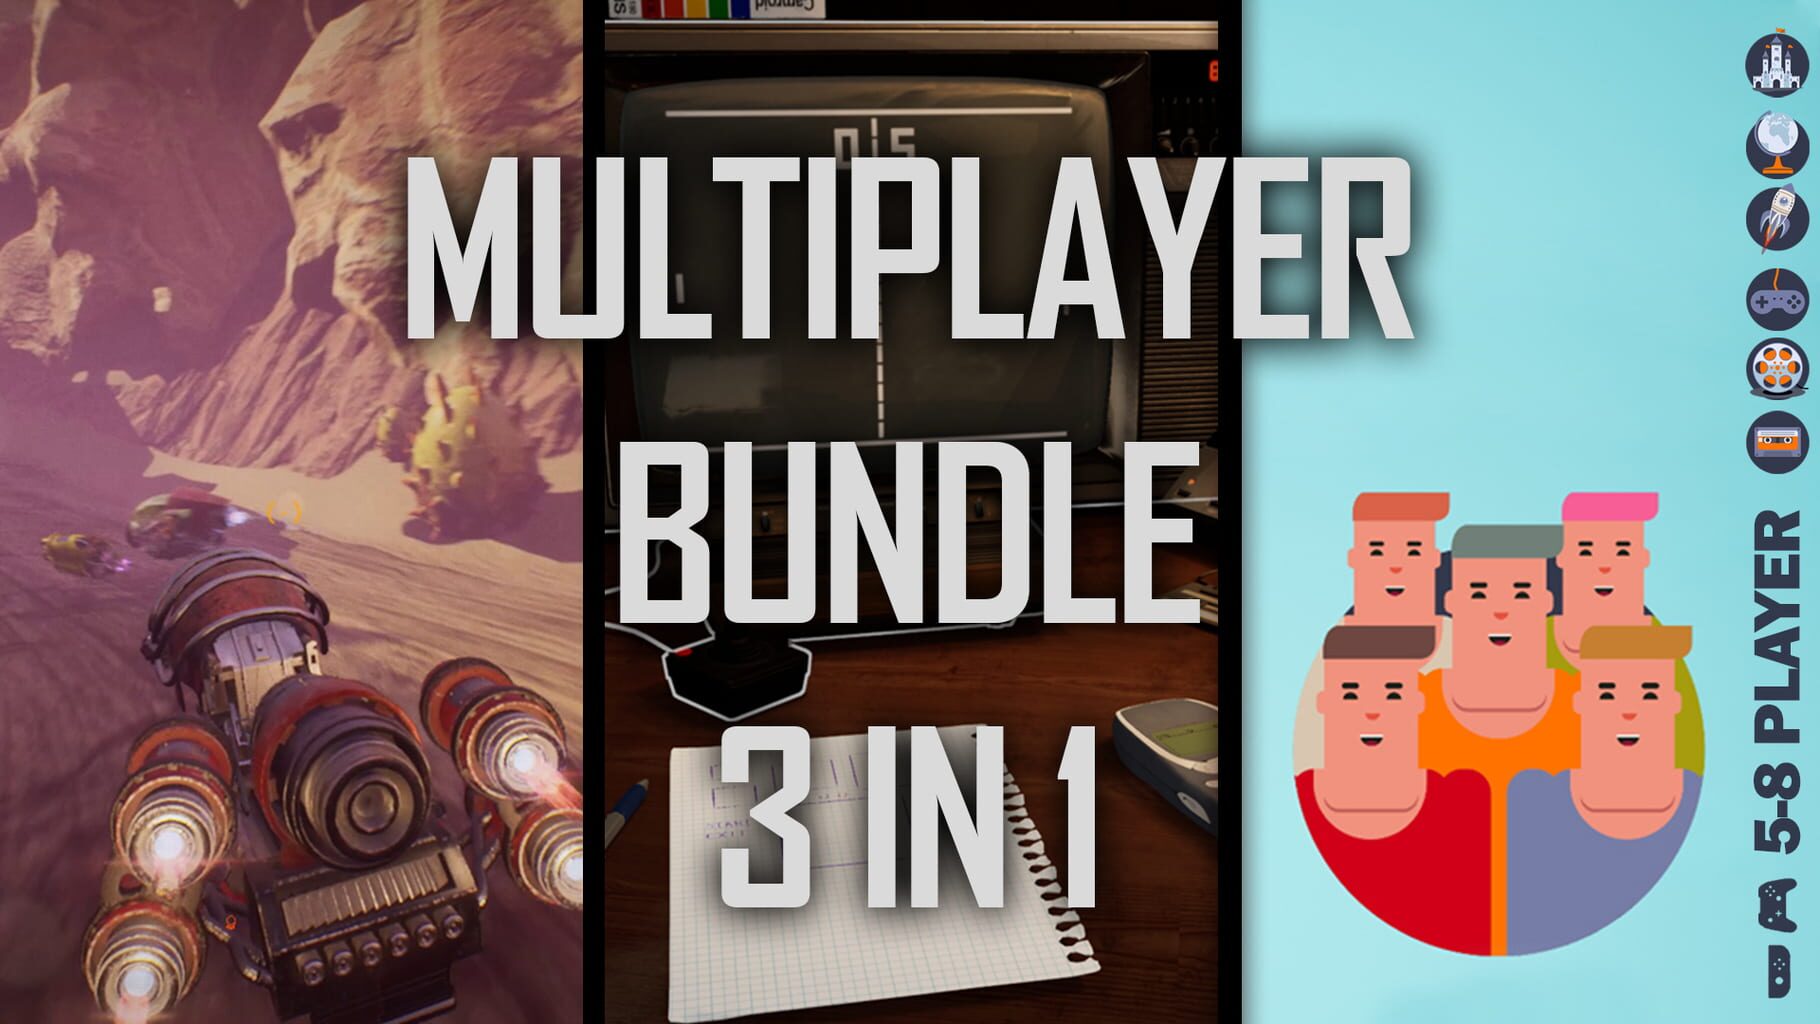 3 in 1: Multiplayer Bundle artwork